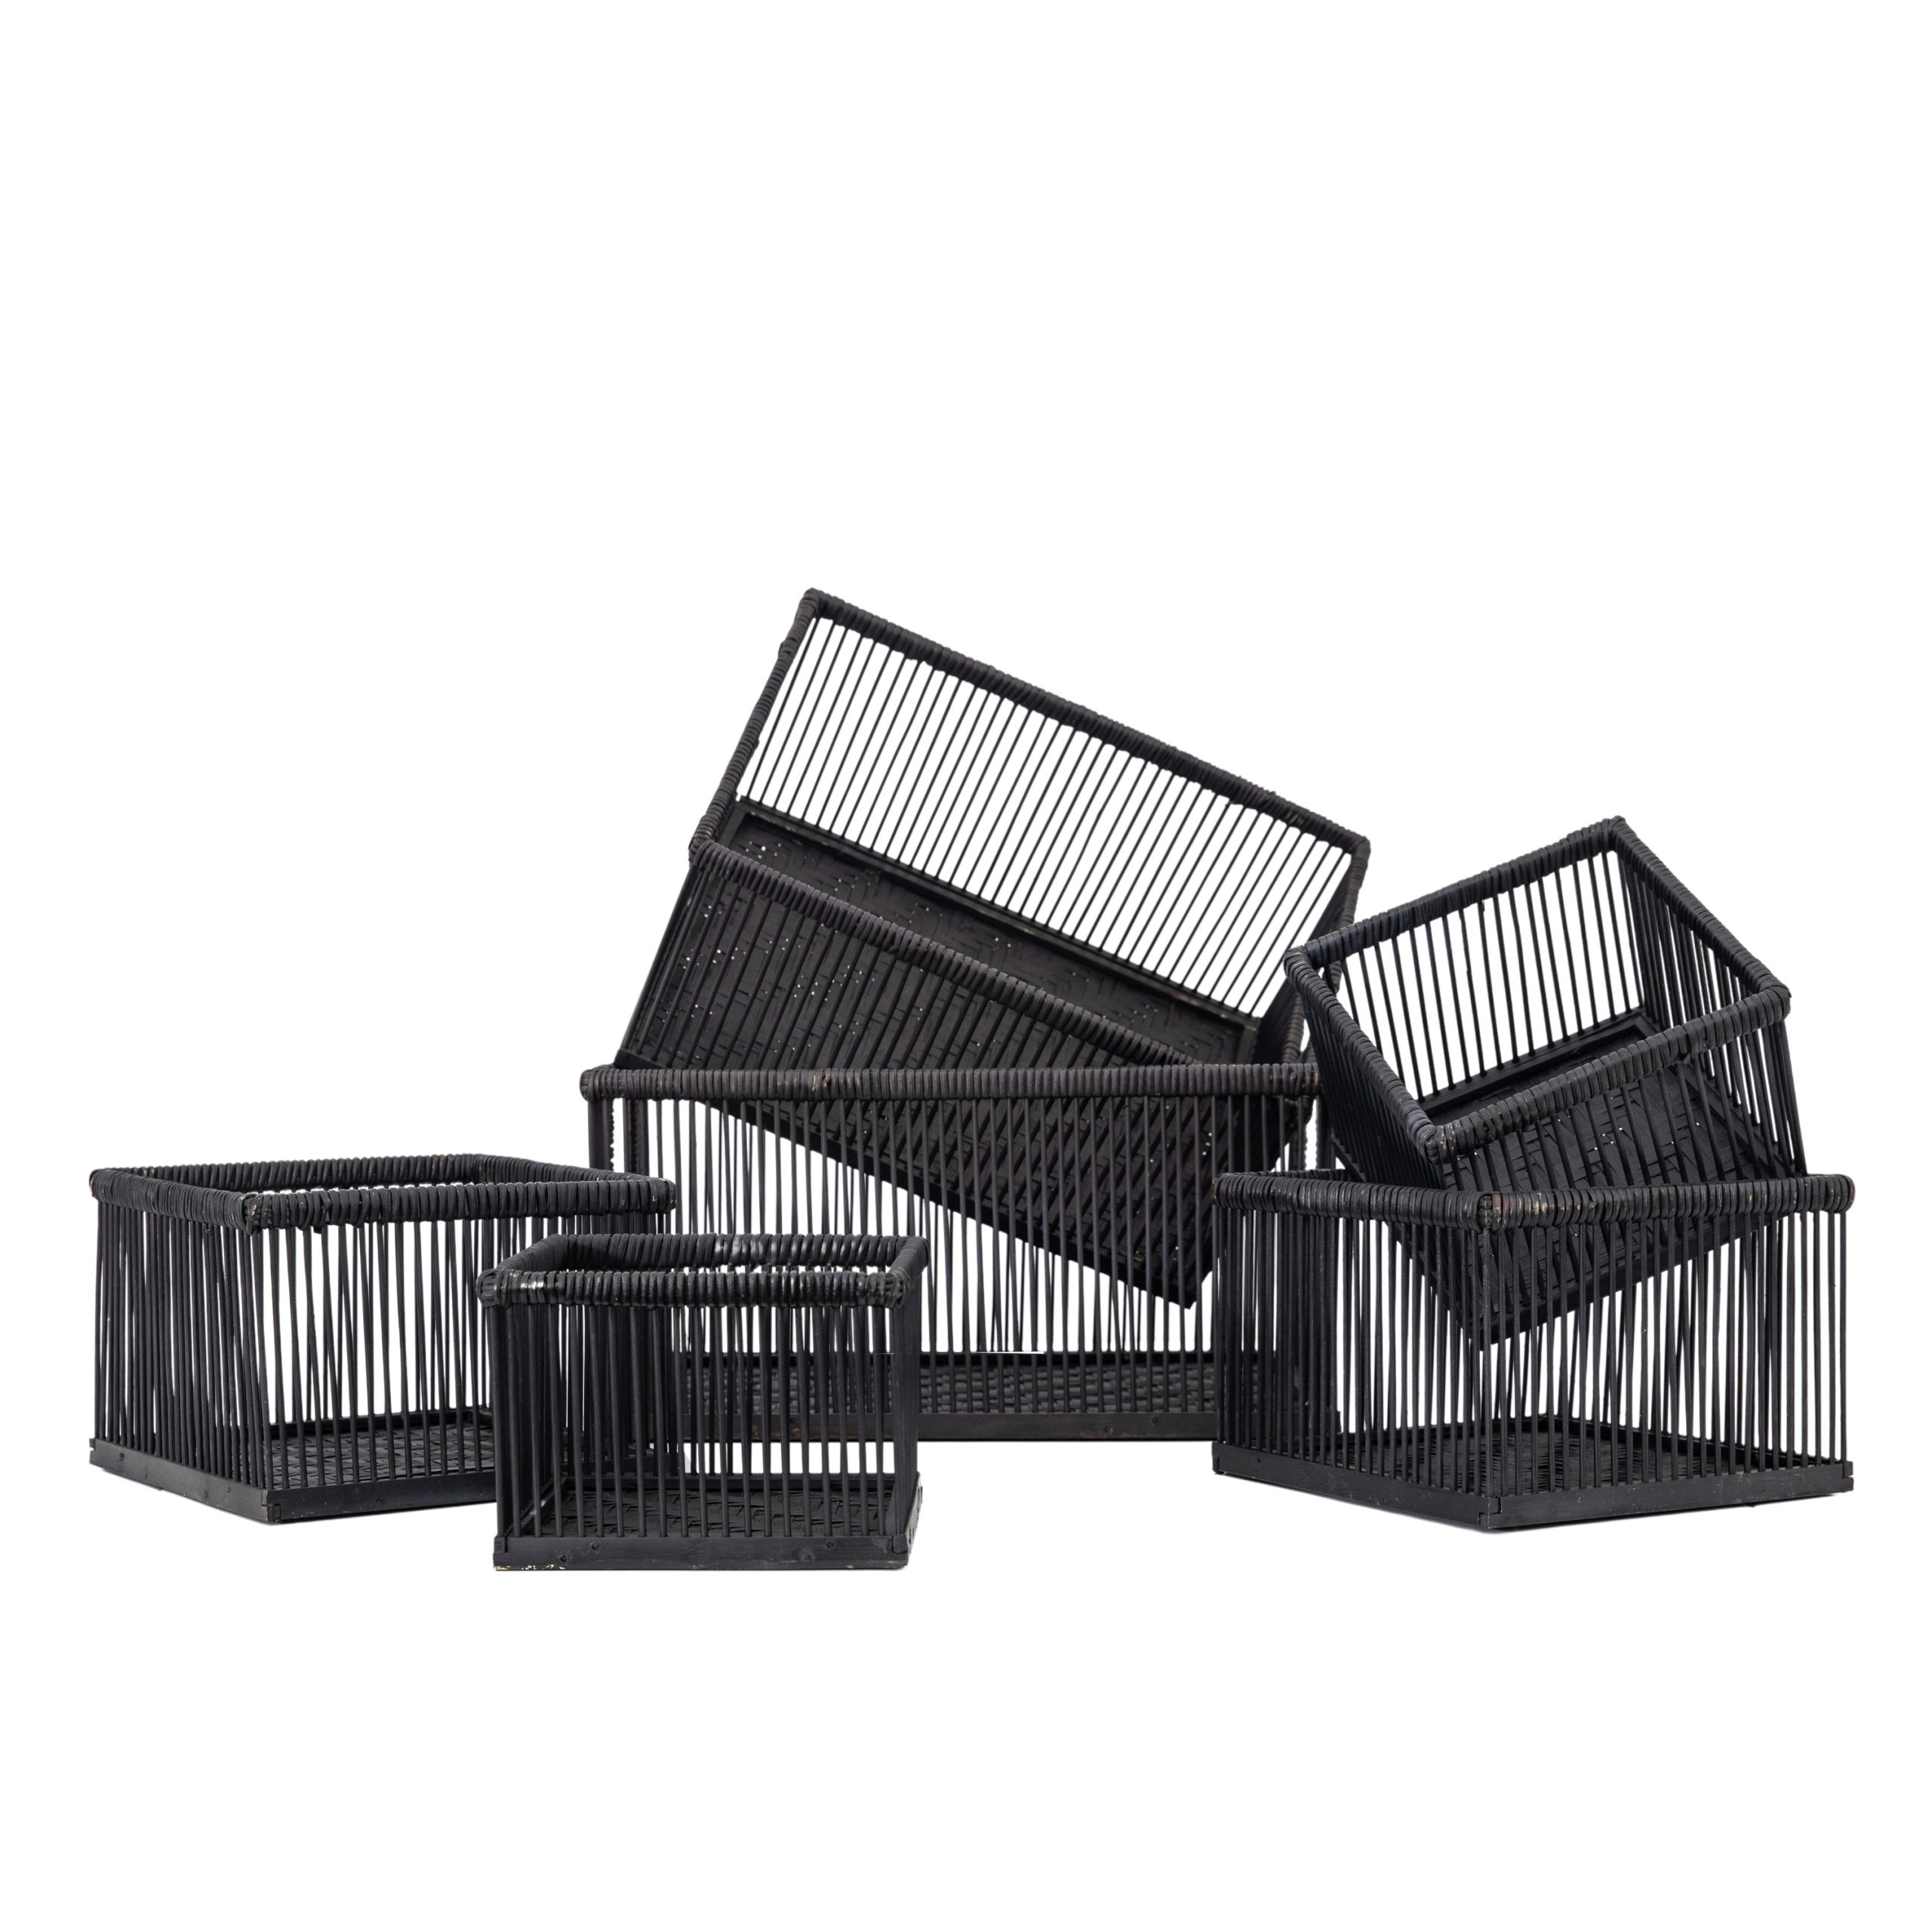 Gallery Direct Timur Baskets Set of 6 Black